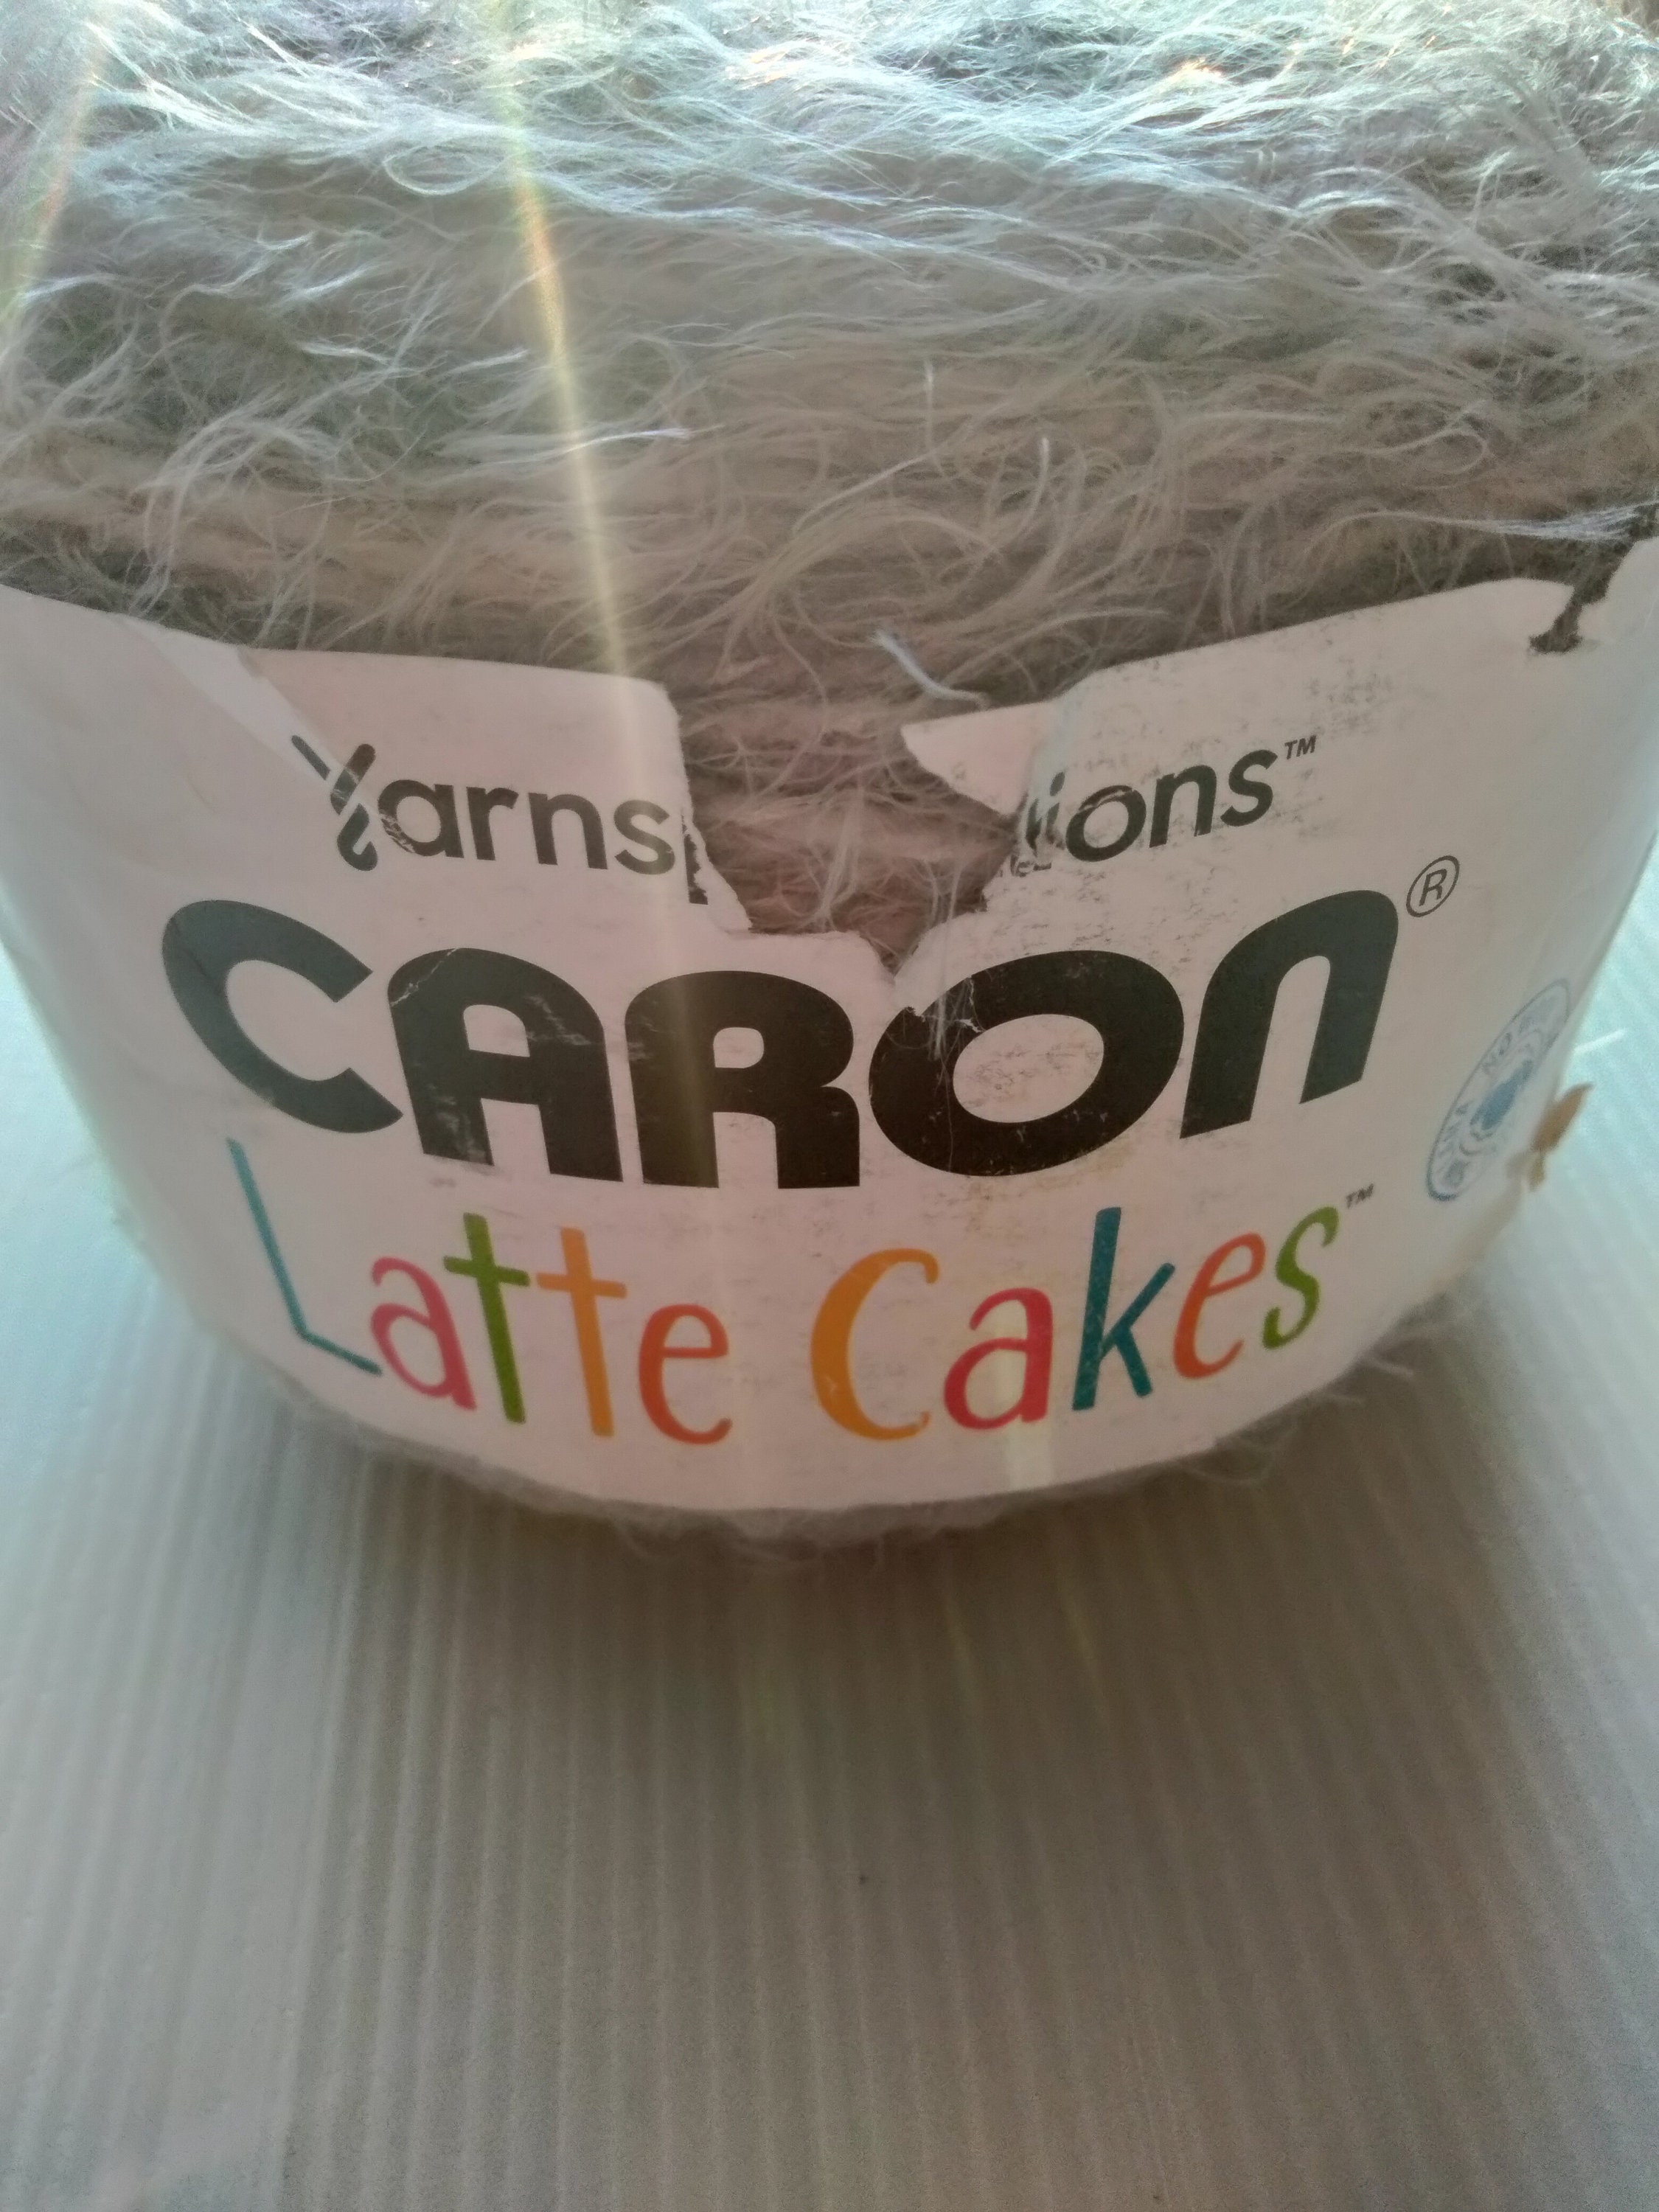 Yarnspirations Caron Latte Cakes Red Macaron Yarn 8.8oz 530 yards